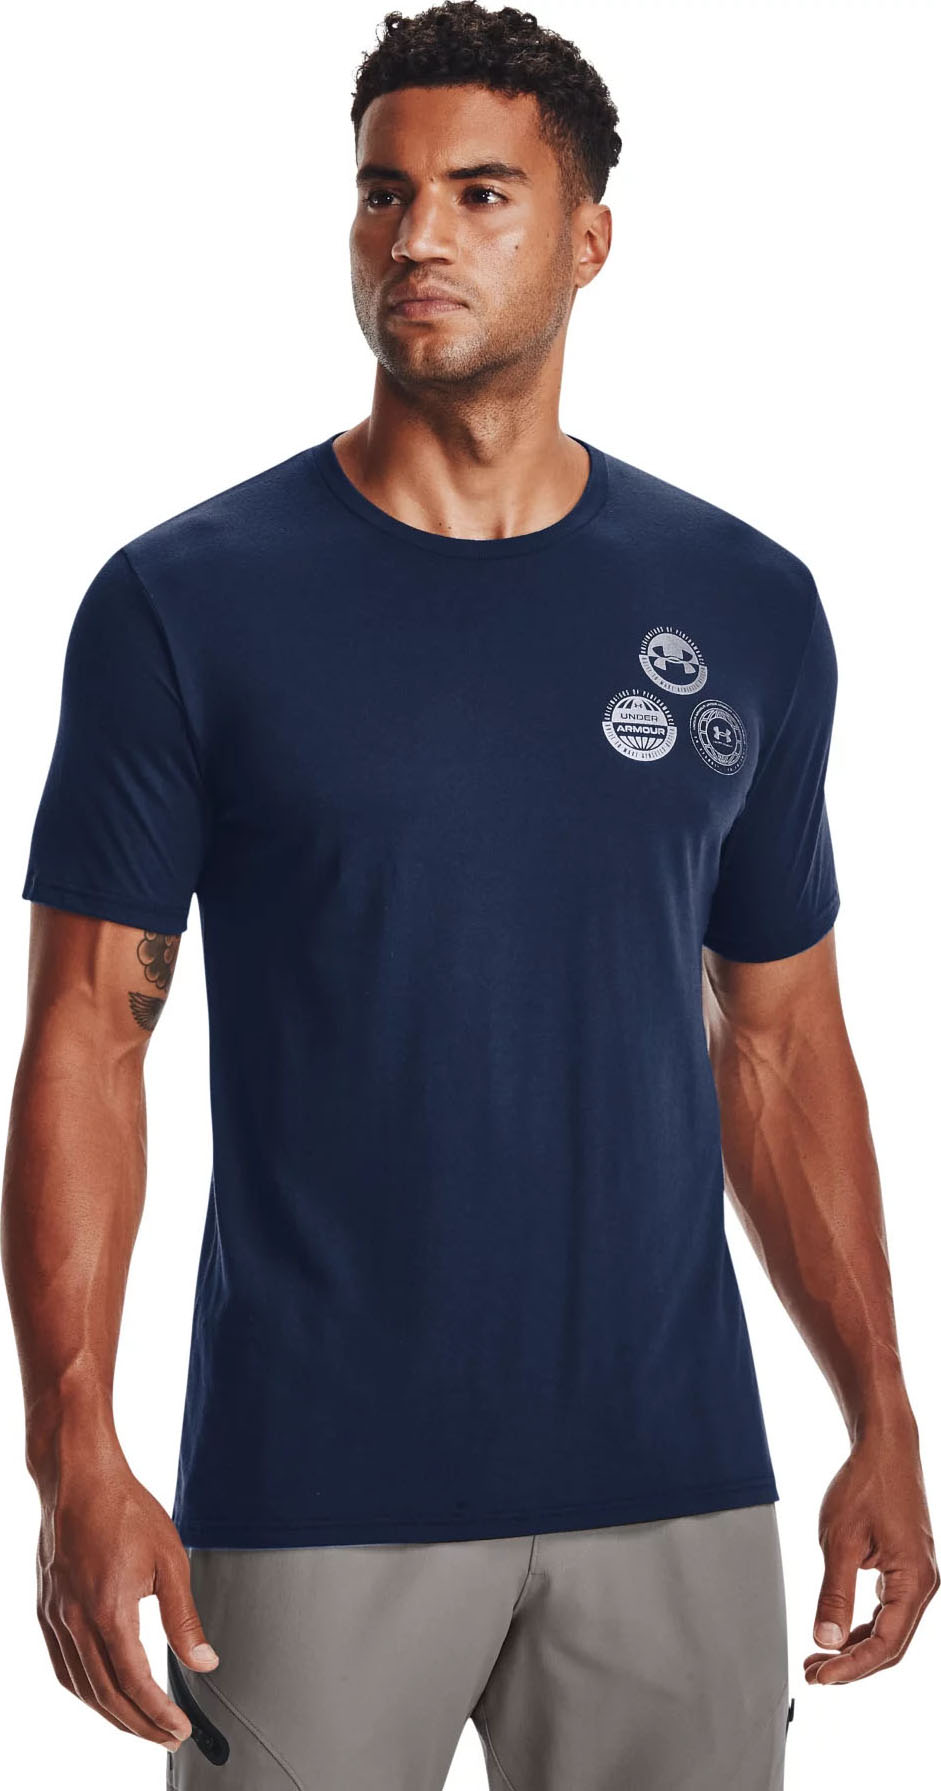 Under Armour - Mens Multi Crest Logo T-Shirt